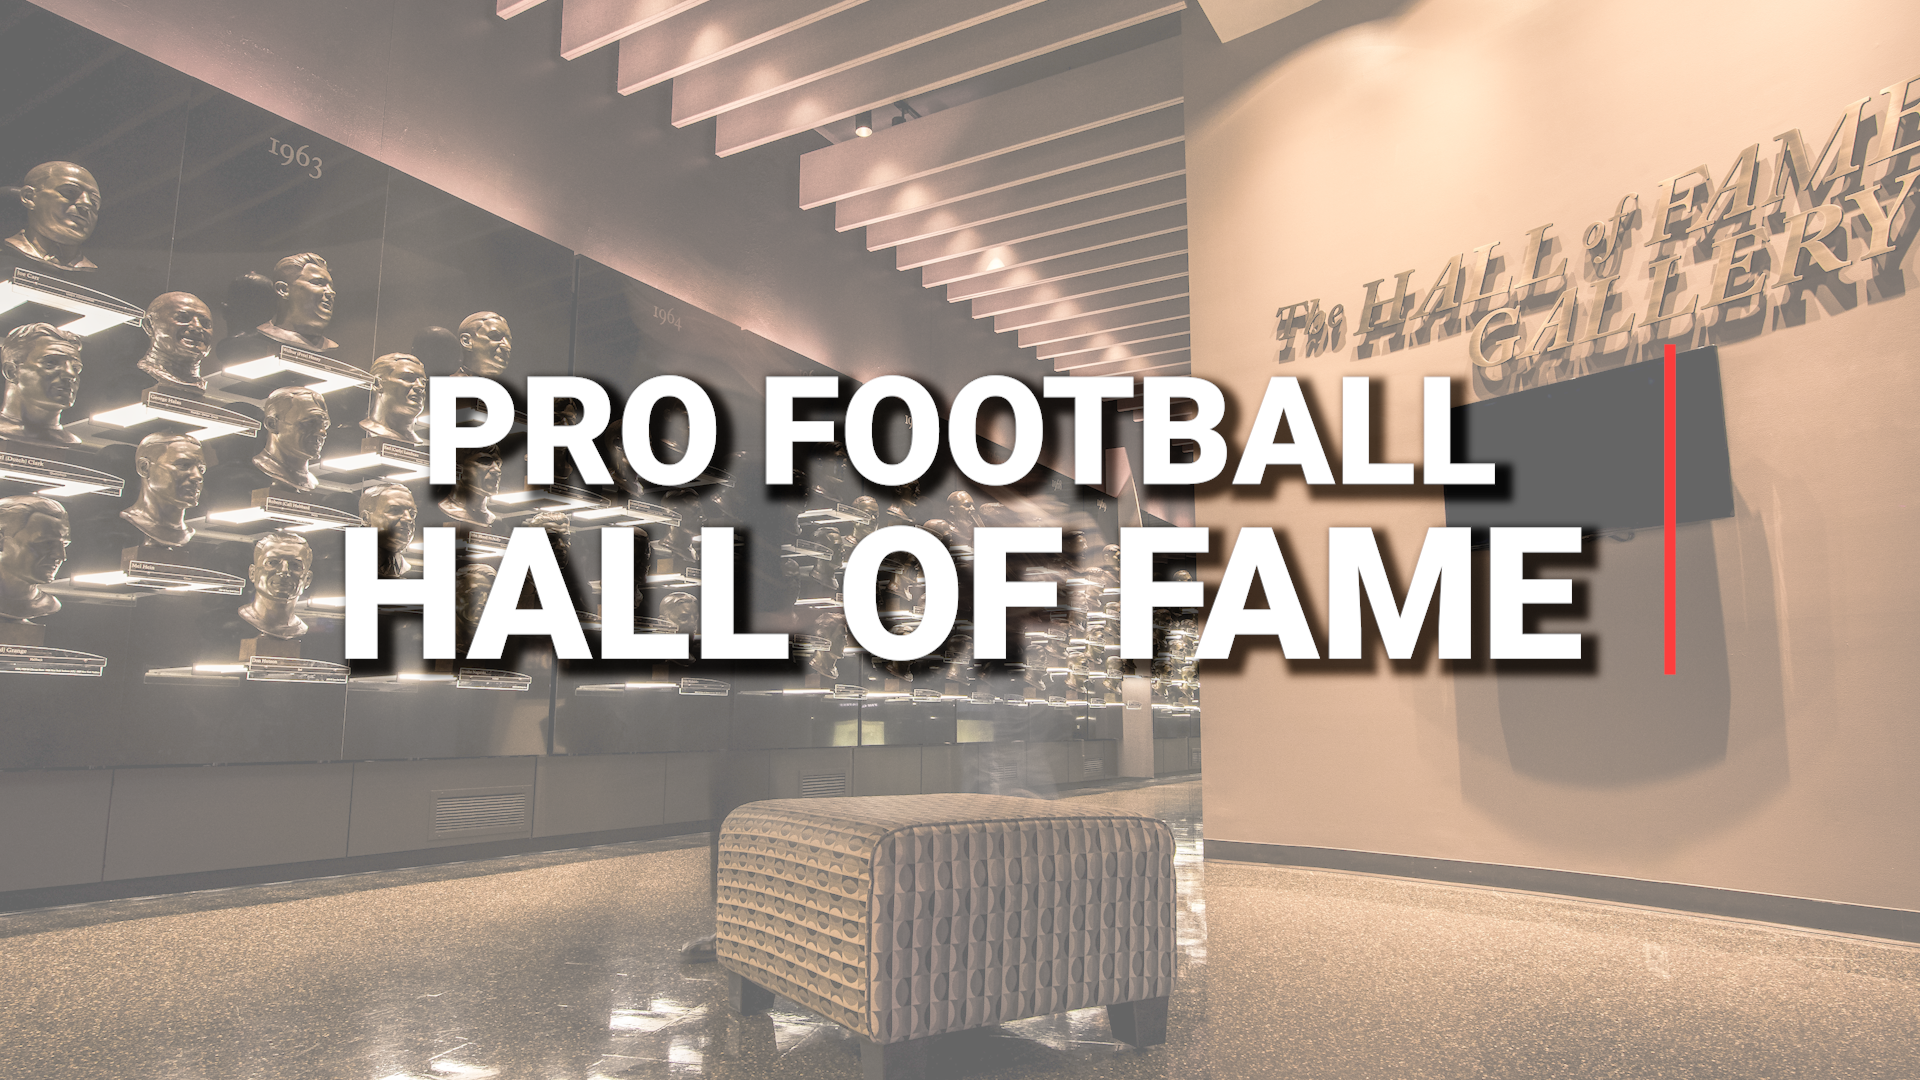 Pro Football Hall of Fame virtual field trip